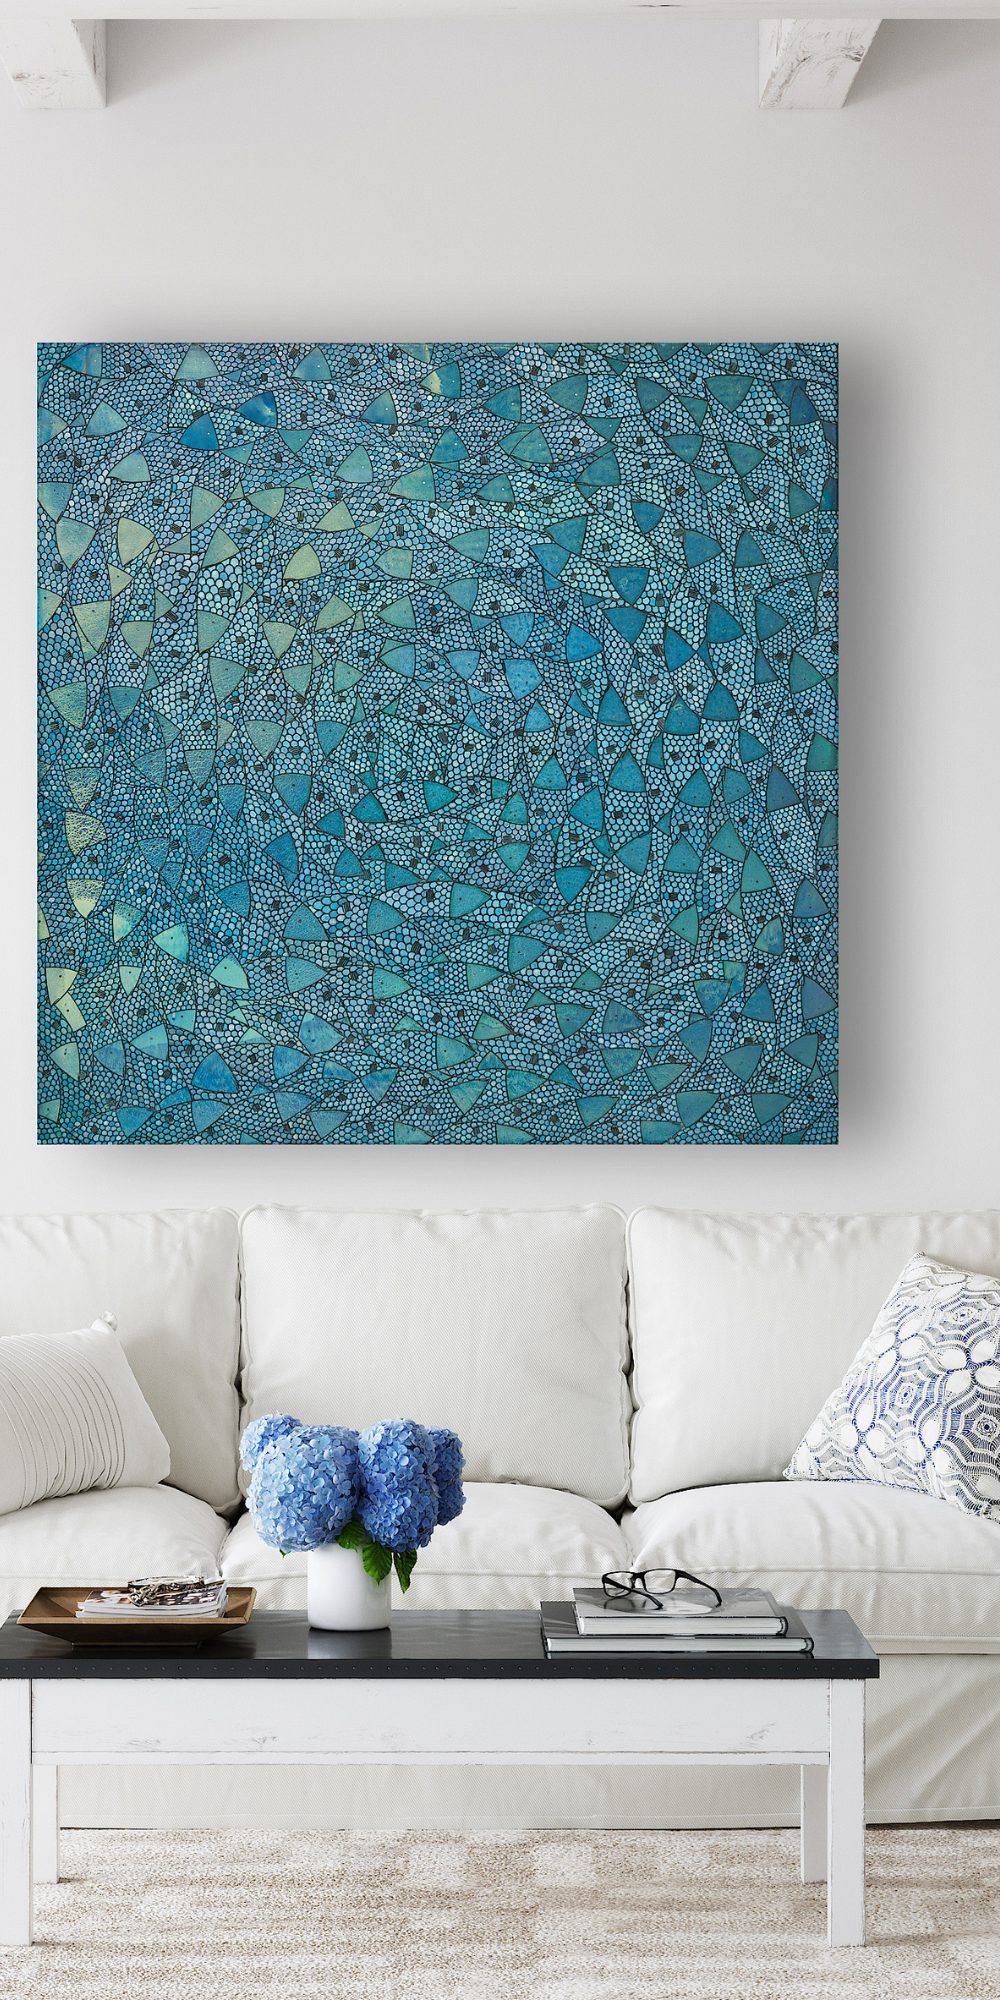 Shown: Blue Sardines, an oil on canvas original painting by seth b minkin